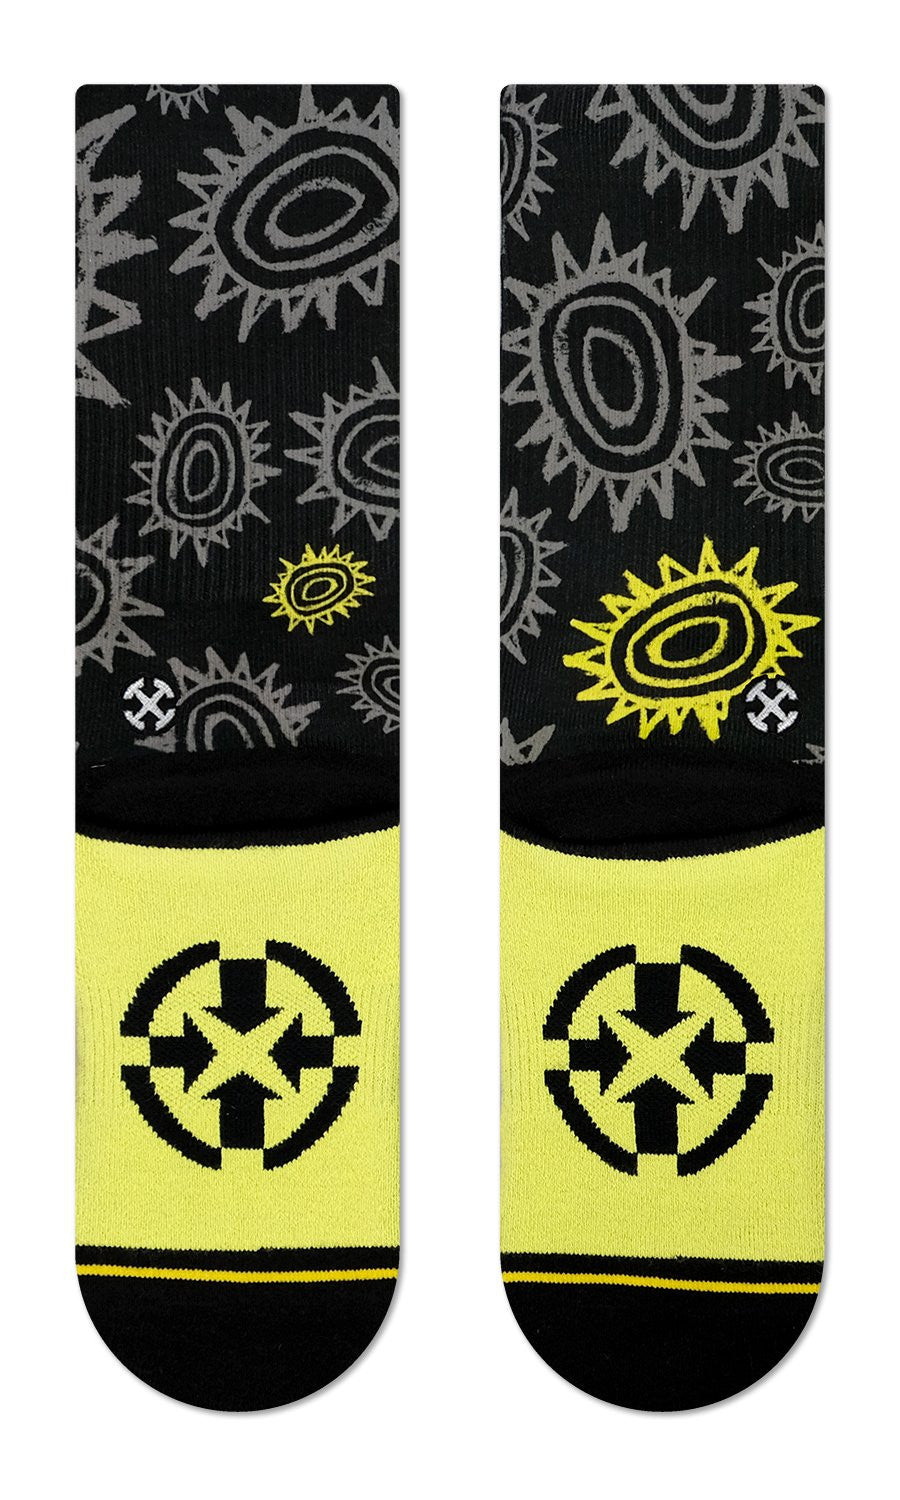 Merge4 Socks - New Deal Sun Pattern   Socks